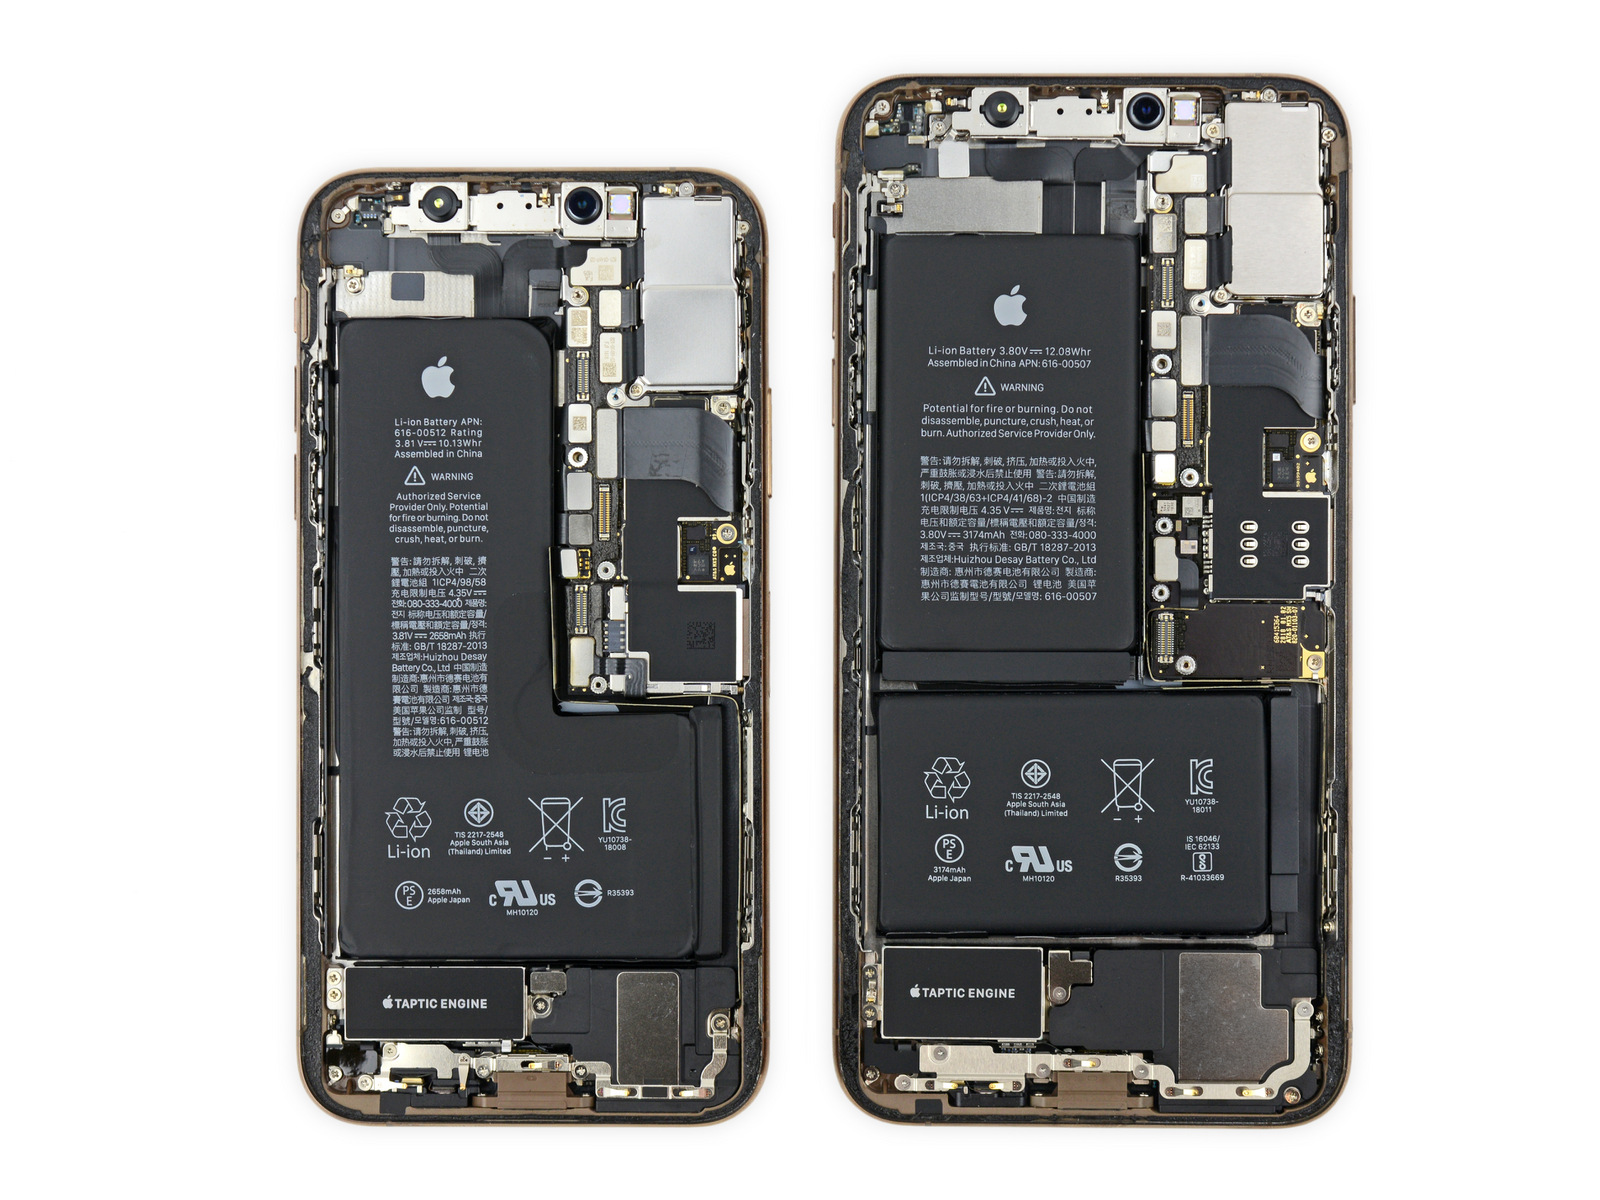 Iphone Xs Max 256gb の製造原価は約5万円 3d Touch関連の部品削減でコスト減との分析 Engadget 日本版